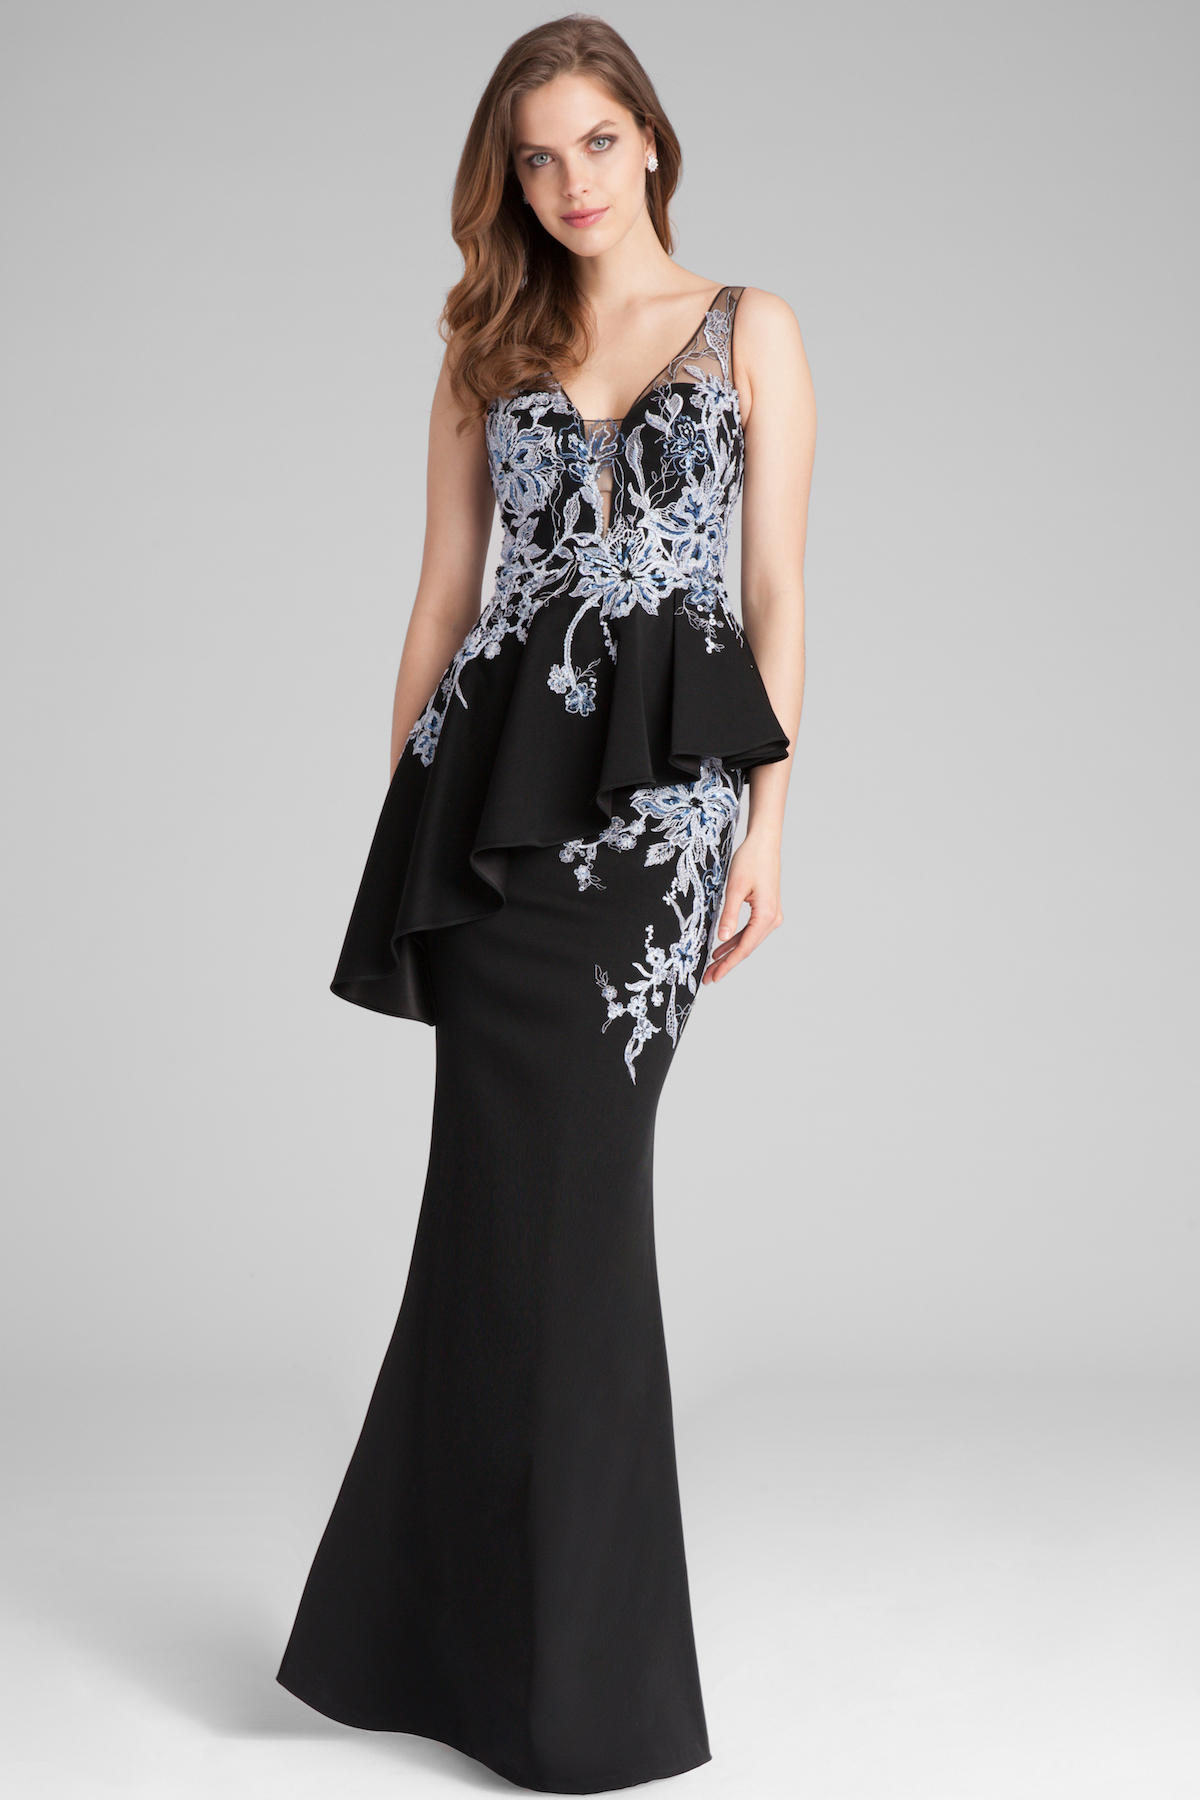 Embellished Illusion Sleeveless Peplum Gown – Mac Duggal